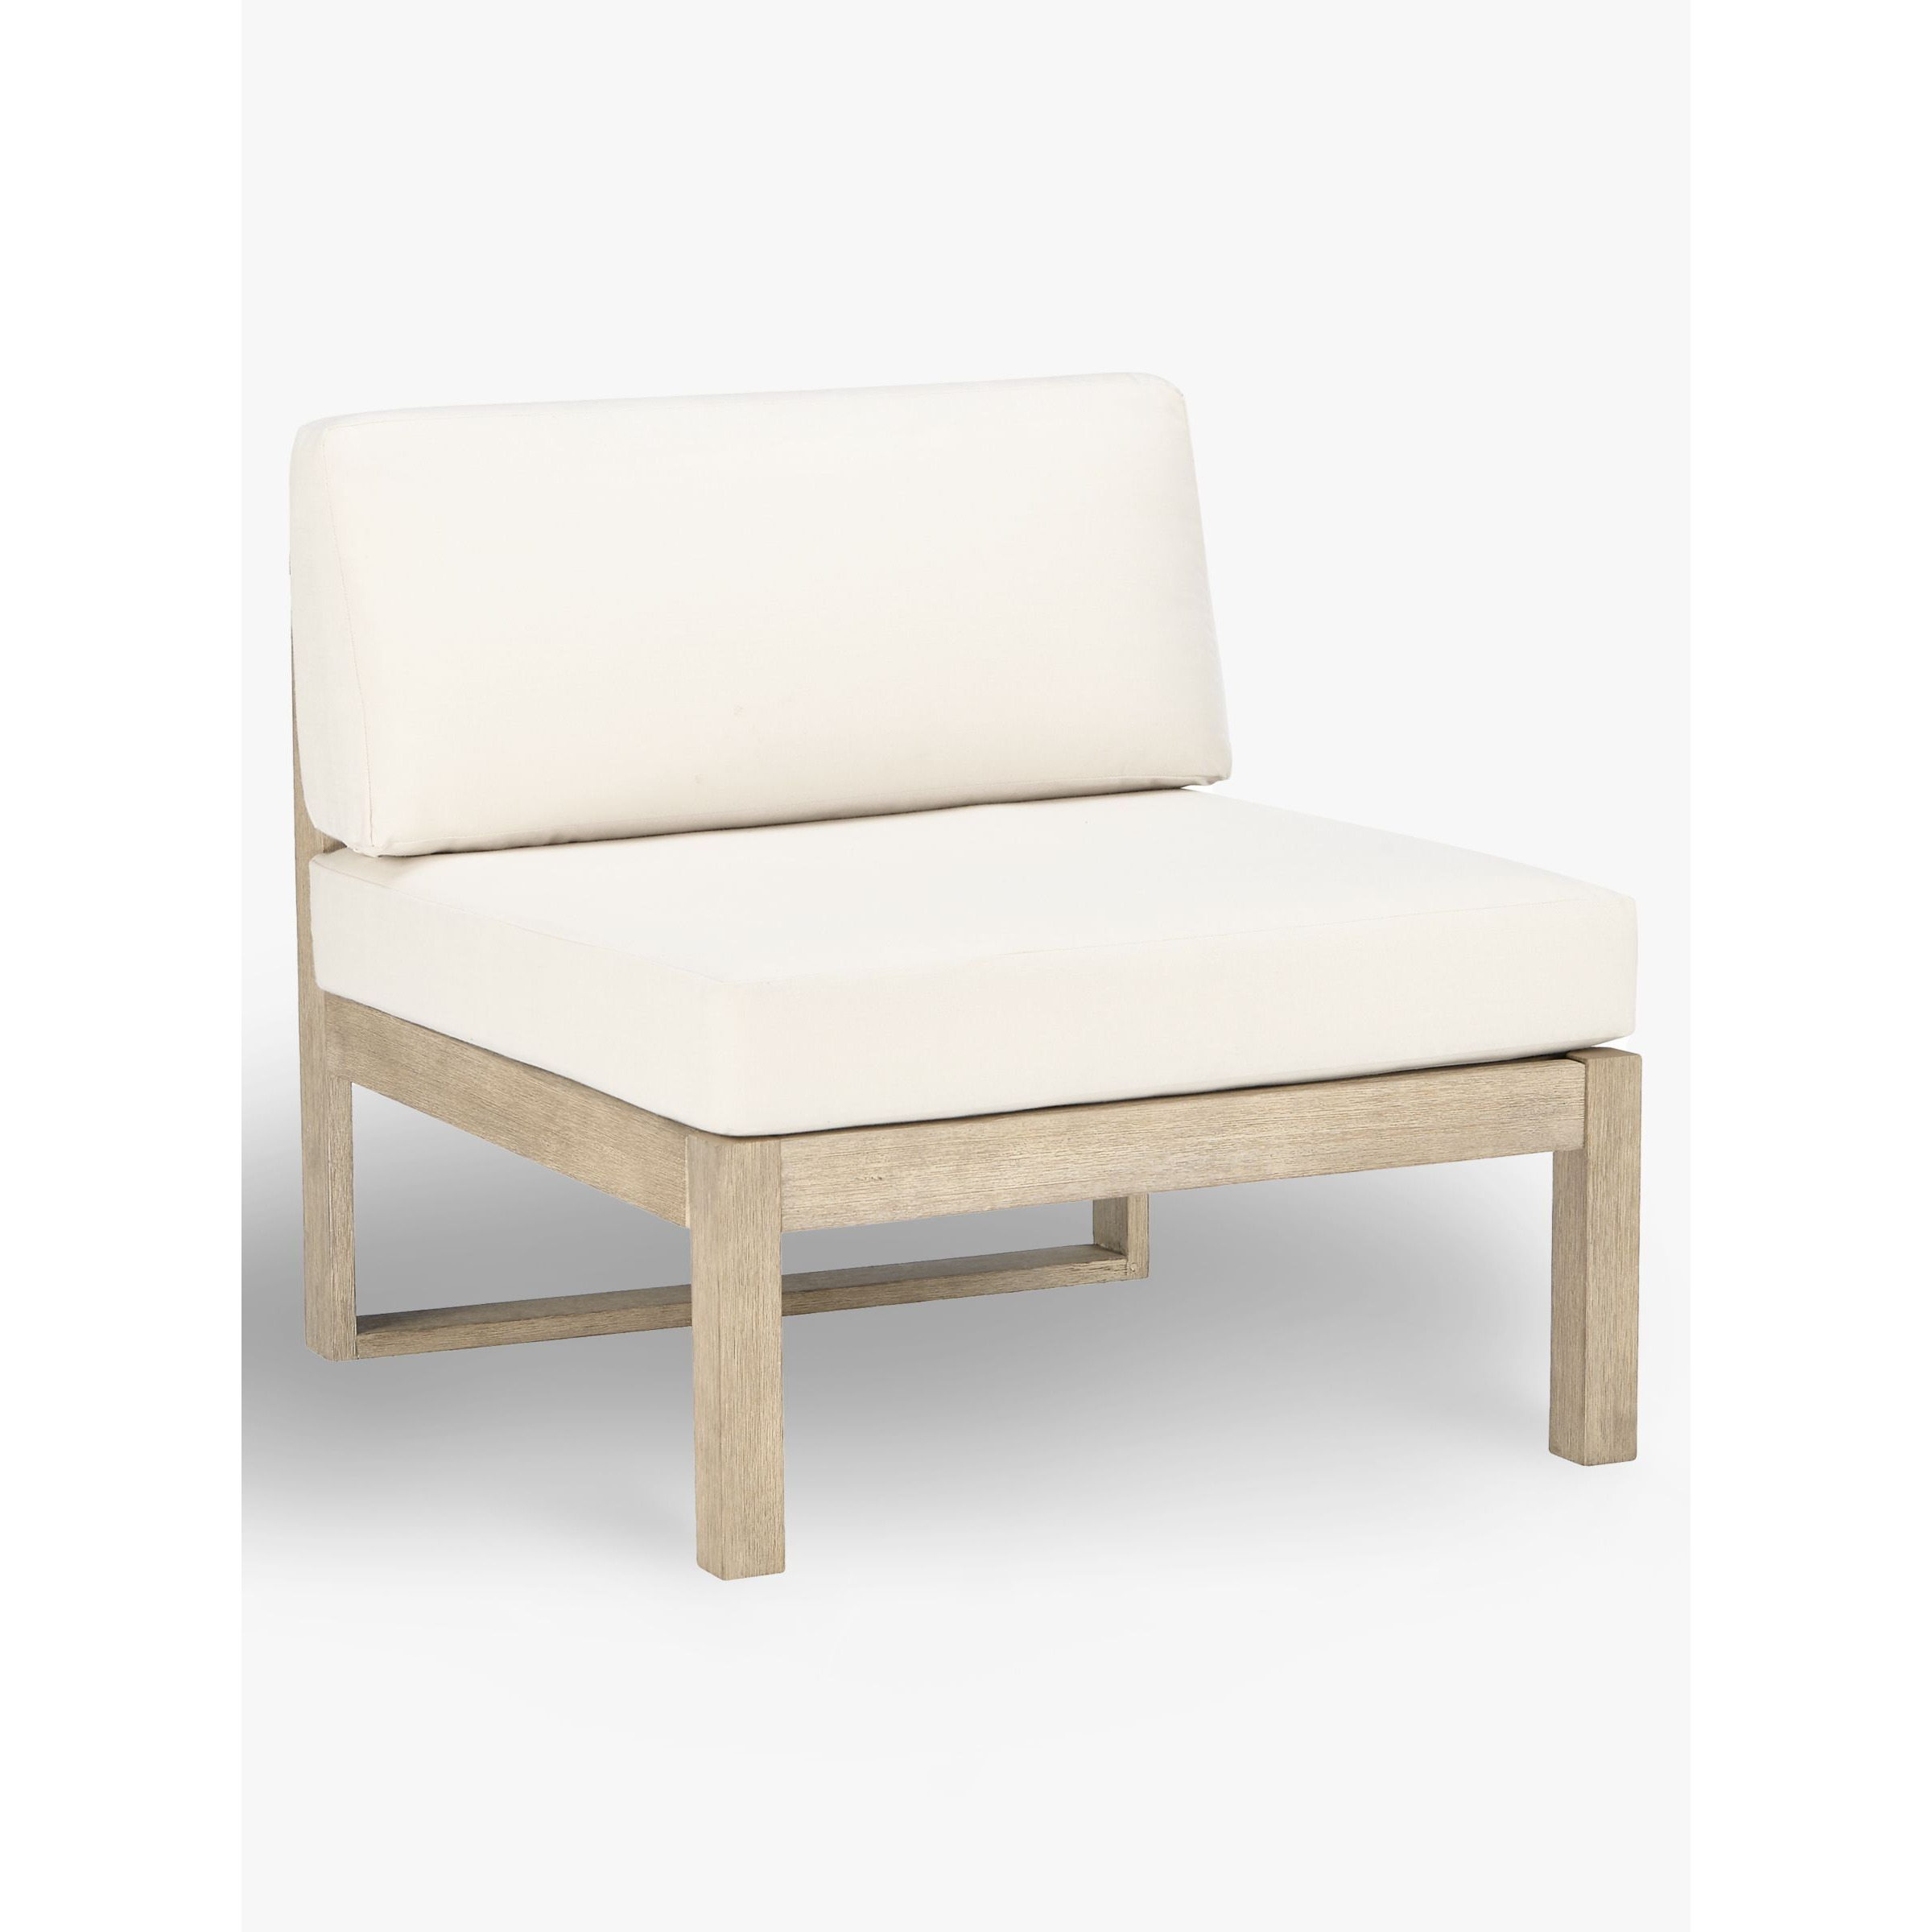 John Lewis St Ives Single Modular Garden Lounge Chair Section, FSC-Certified (Eucalyptus Wood), Natural - image 1